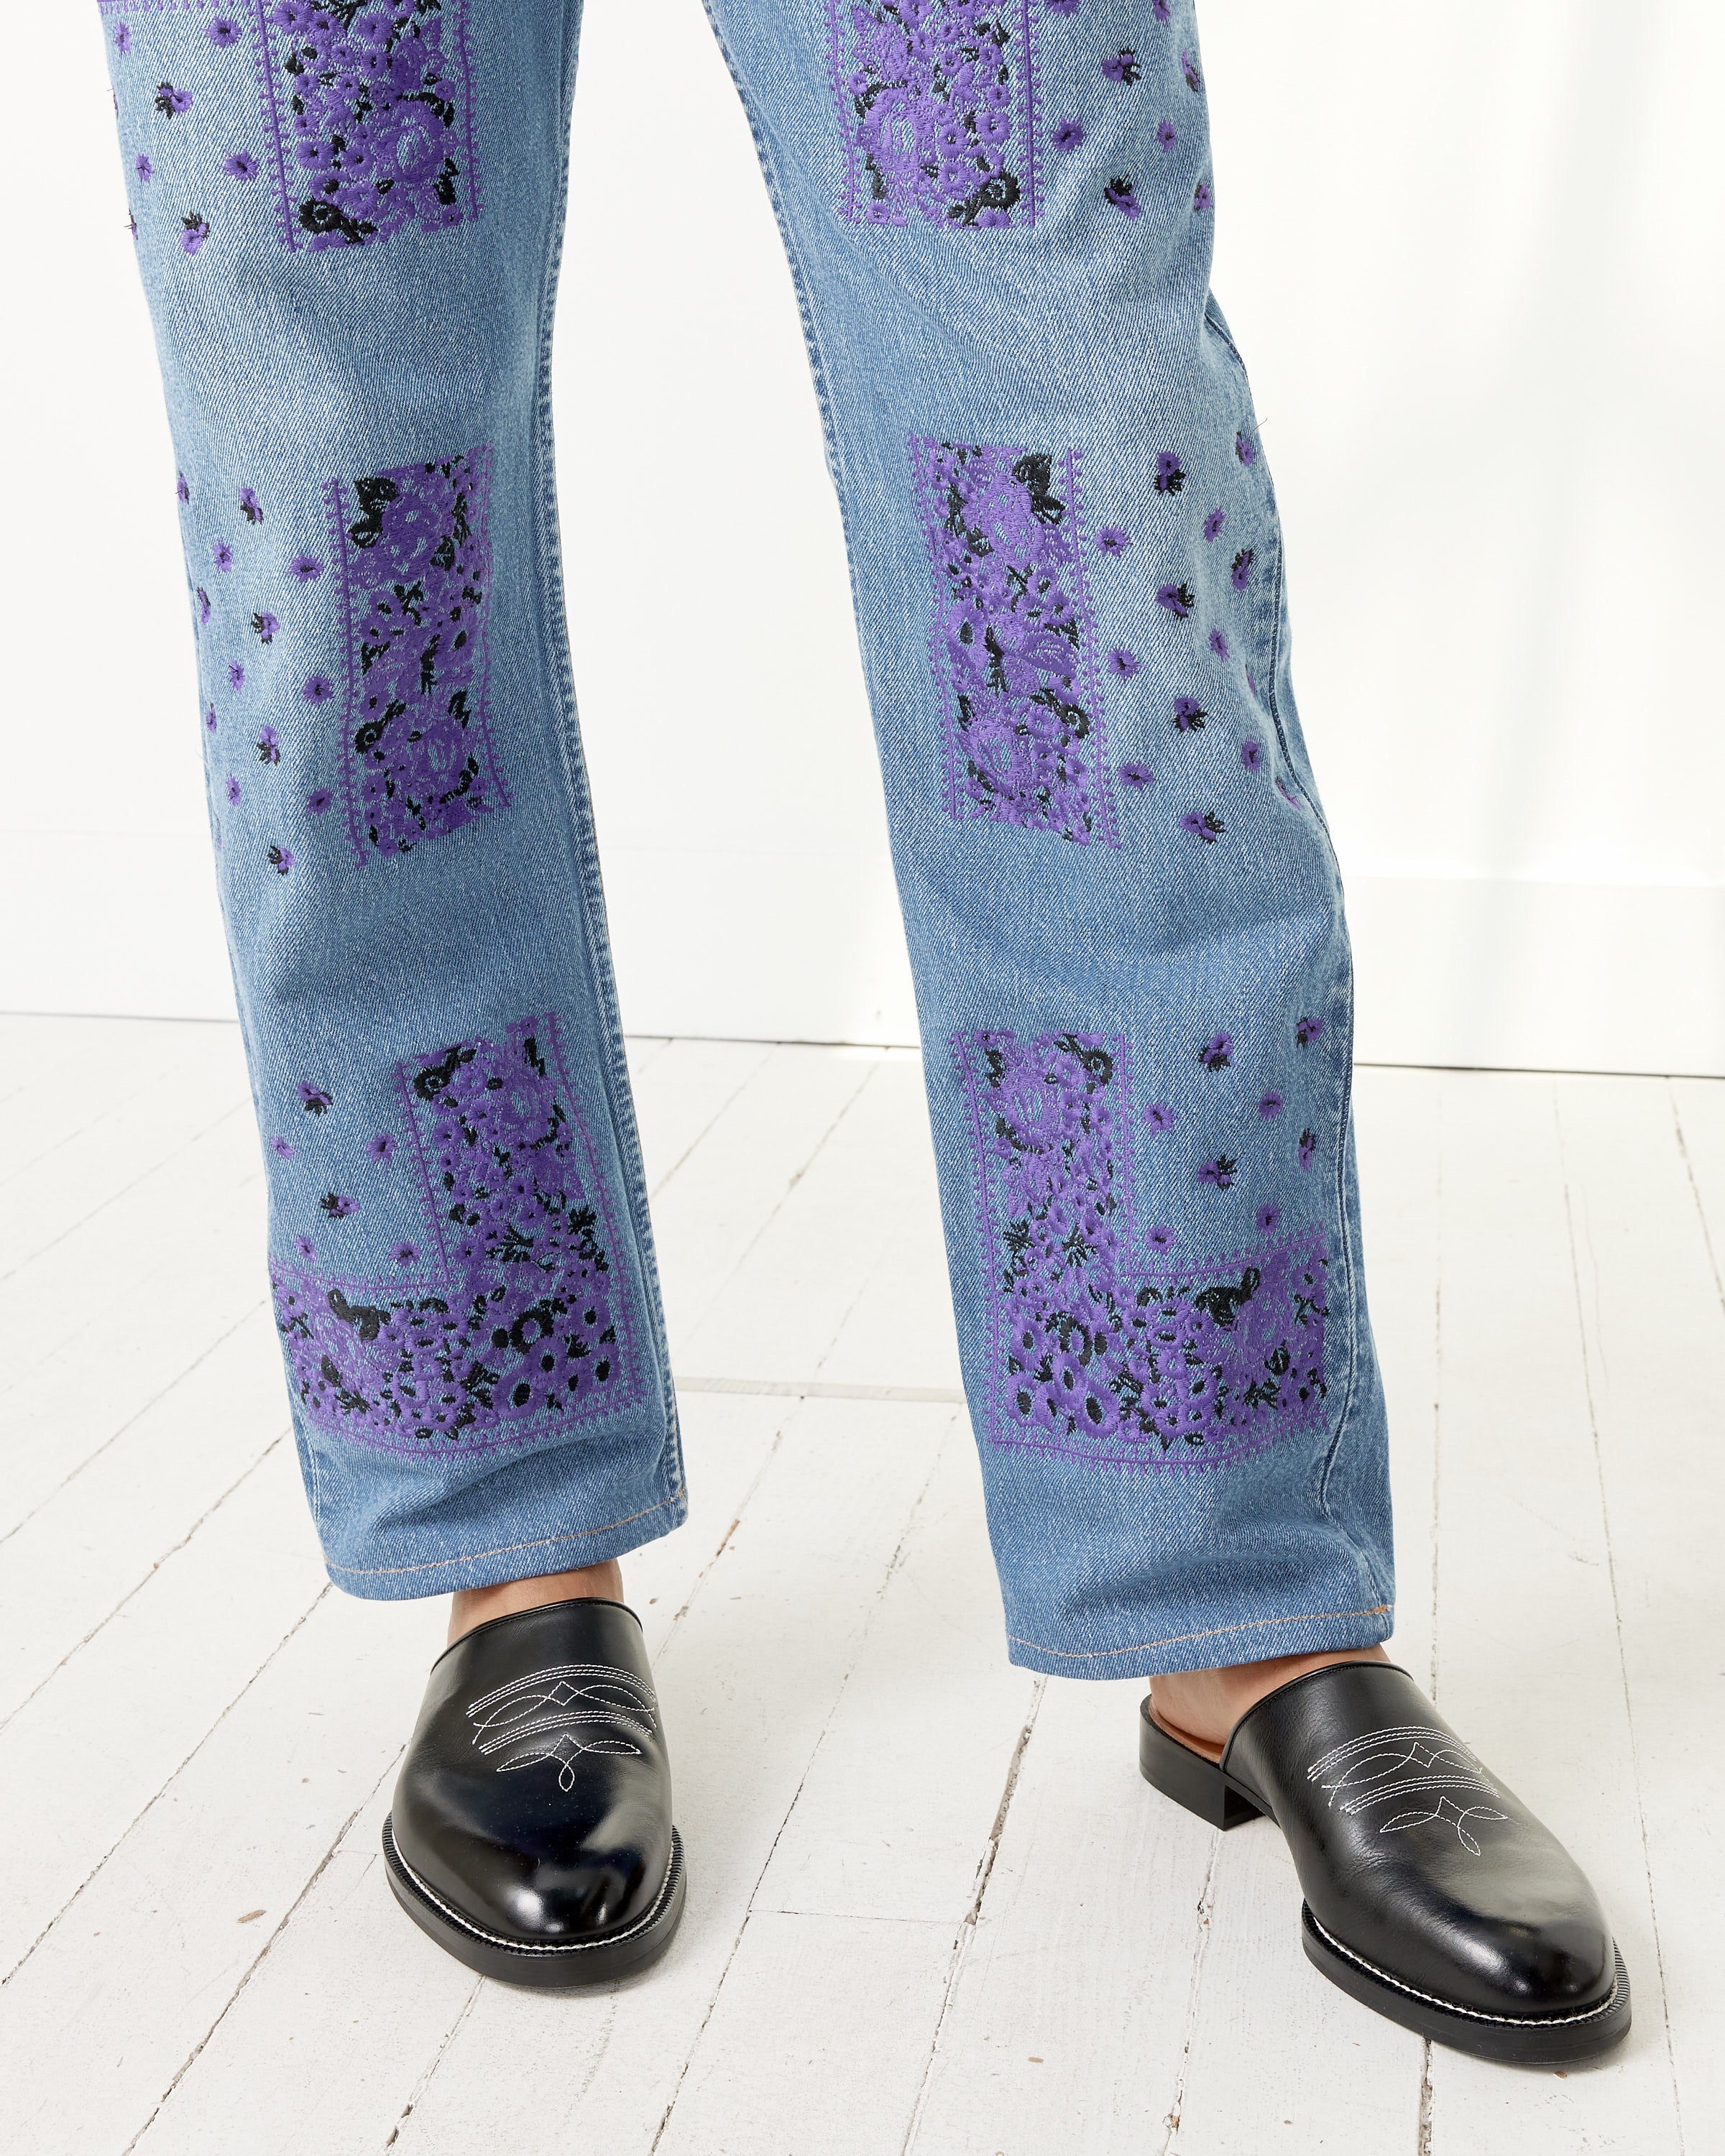 Bandana Embroidery Denim Pants